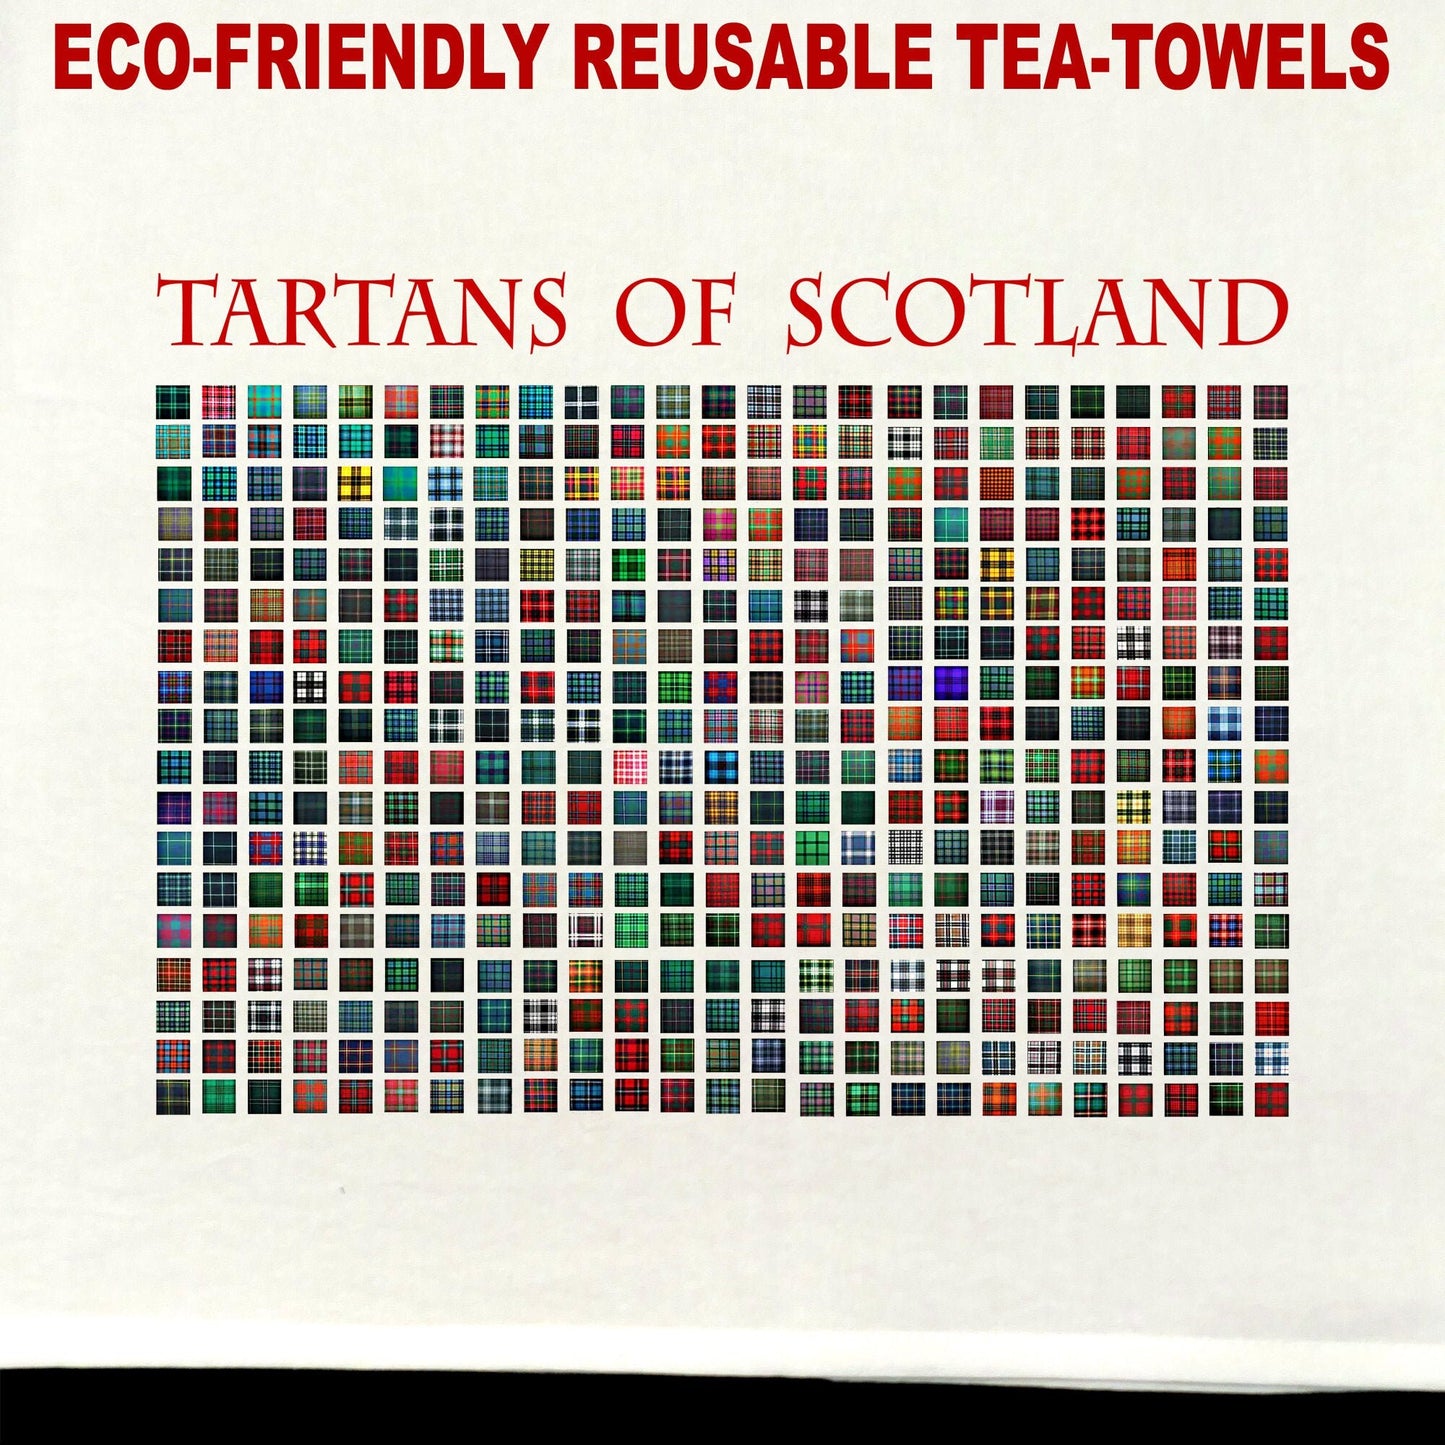 Tartans of Scotland Tea Towel / tea towel / dish towel / hand towel / reusable wipe / kitchen gift / kitchen deco